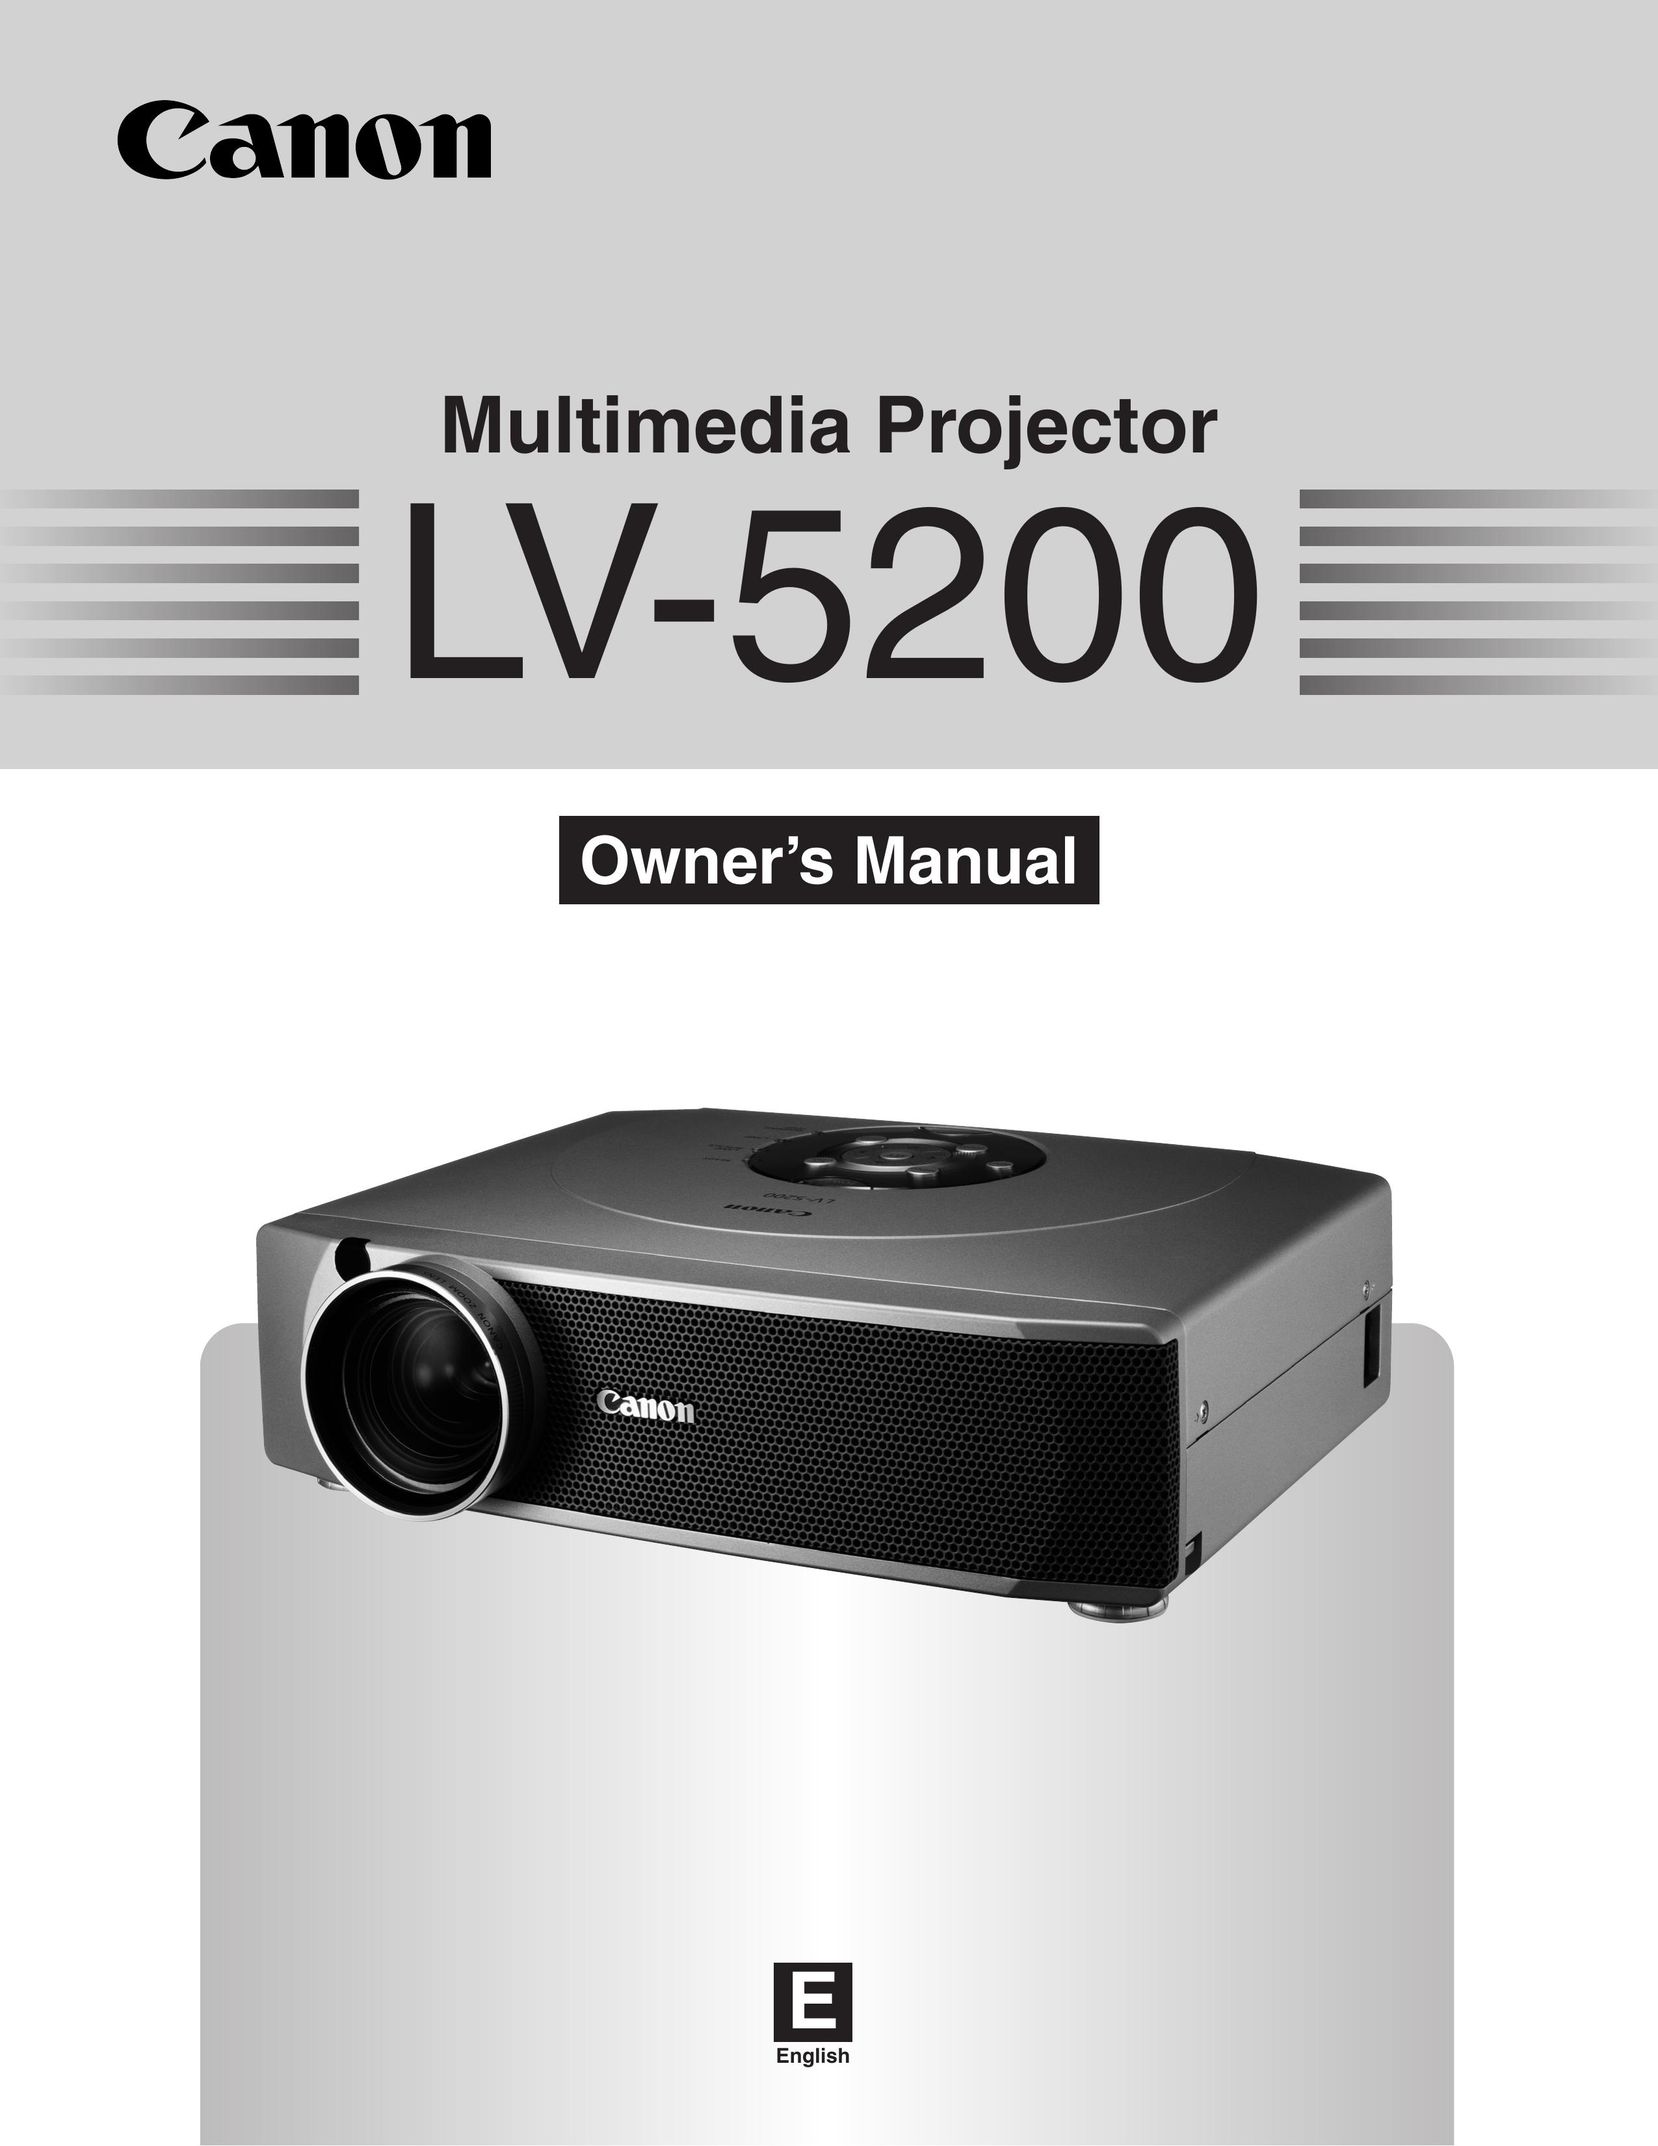 Canon LV-5200 Projector User Manual